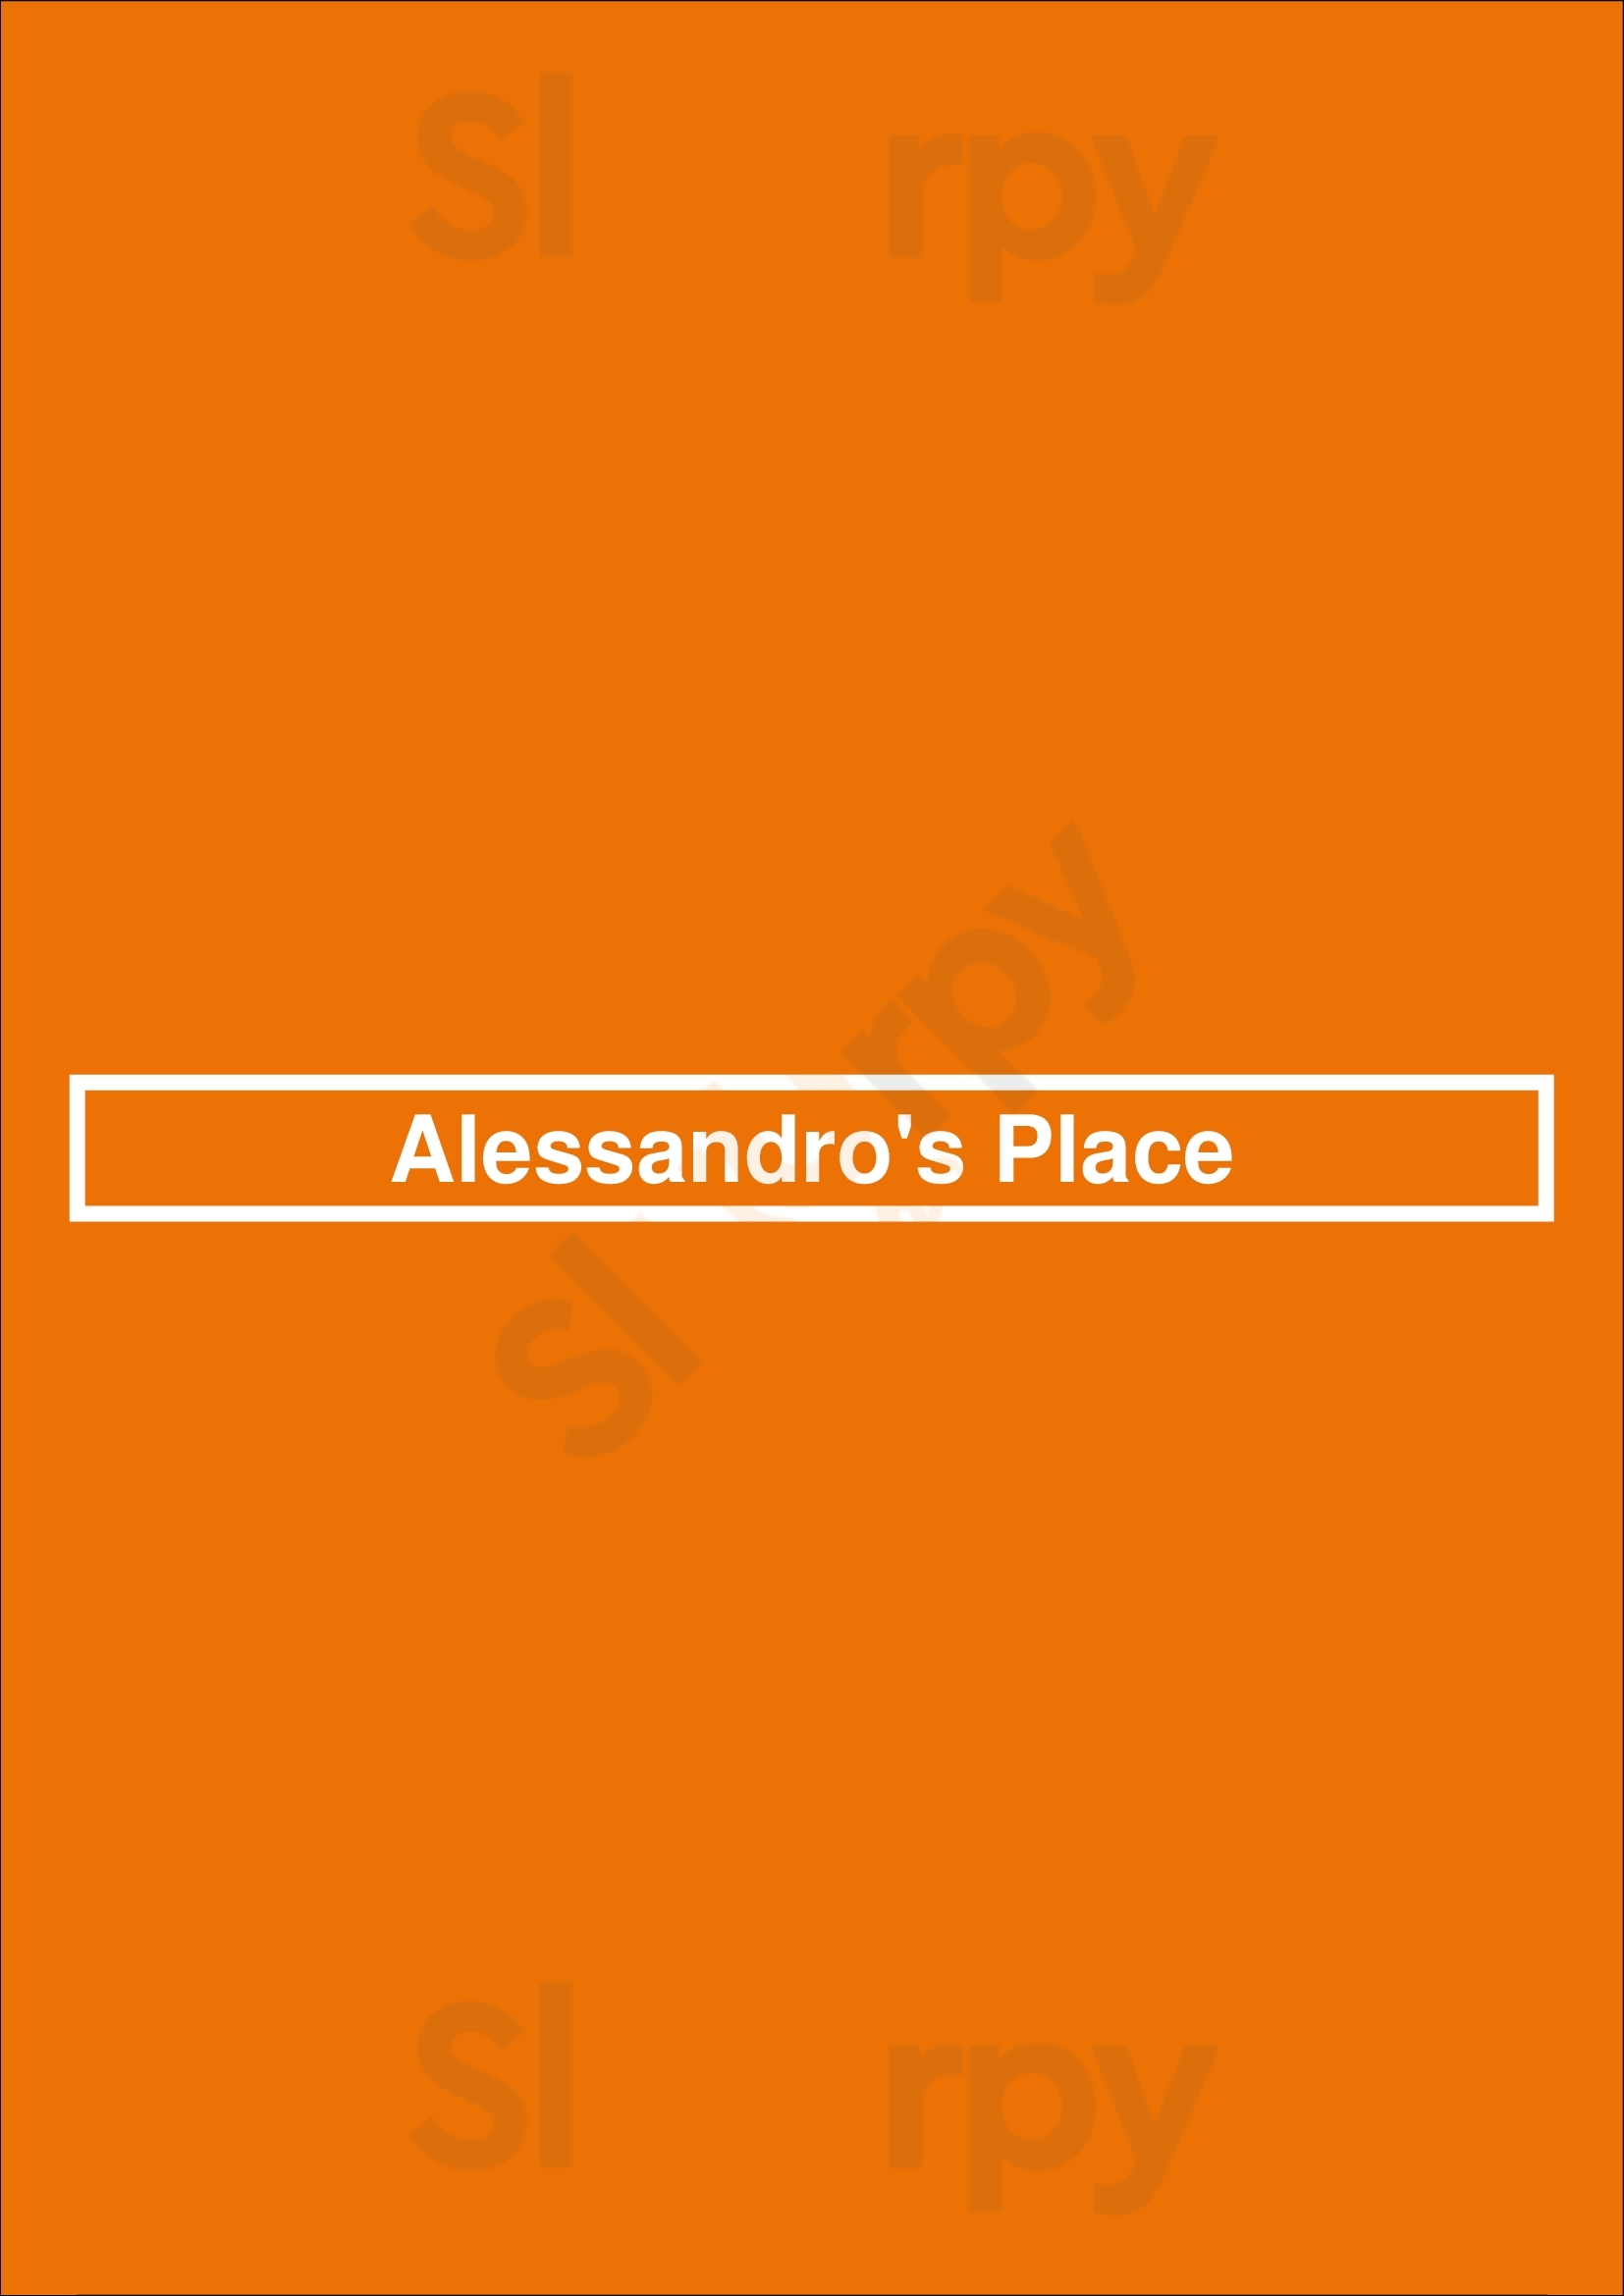 Alessandro's Place Los Angeles Menu - 1